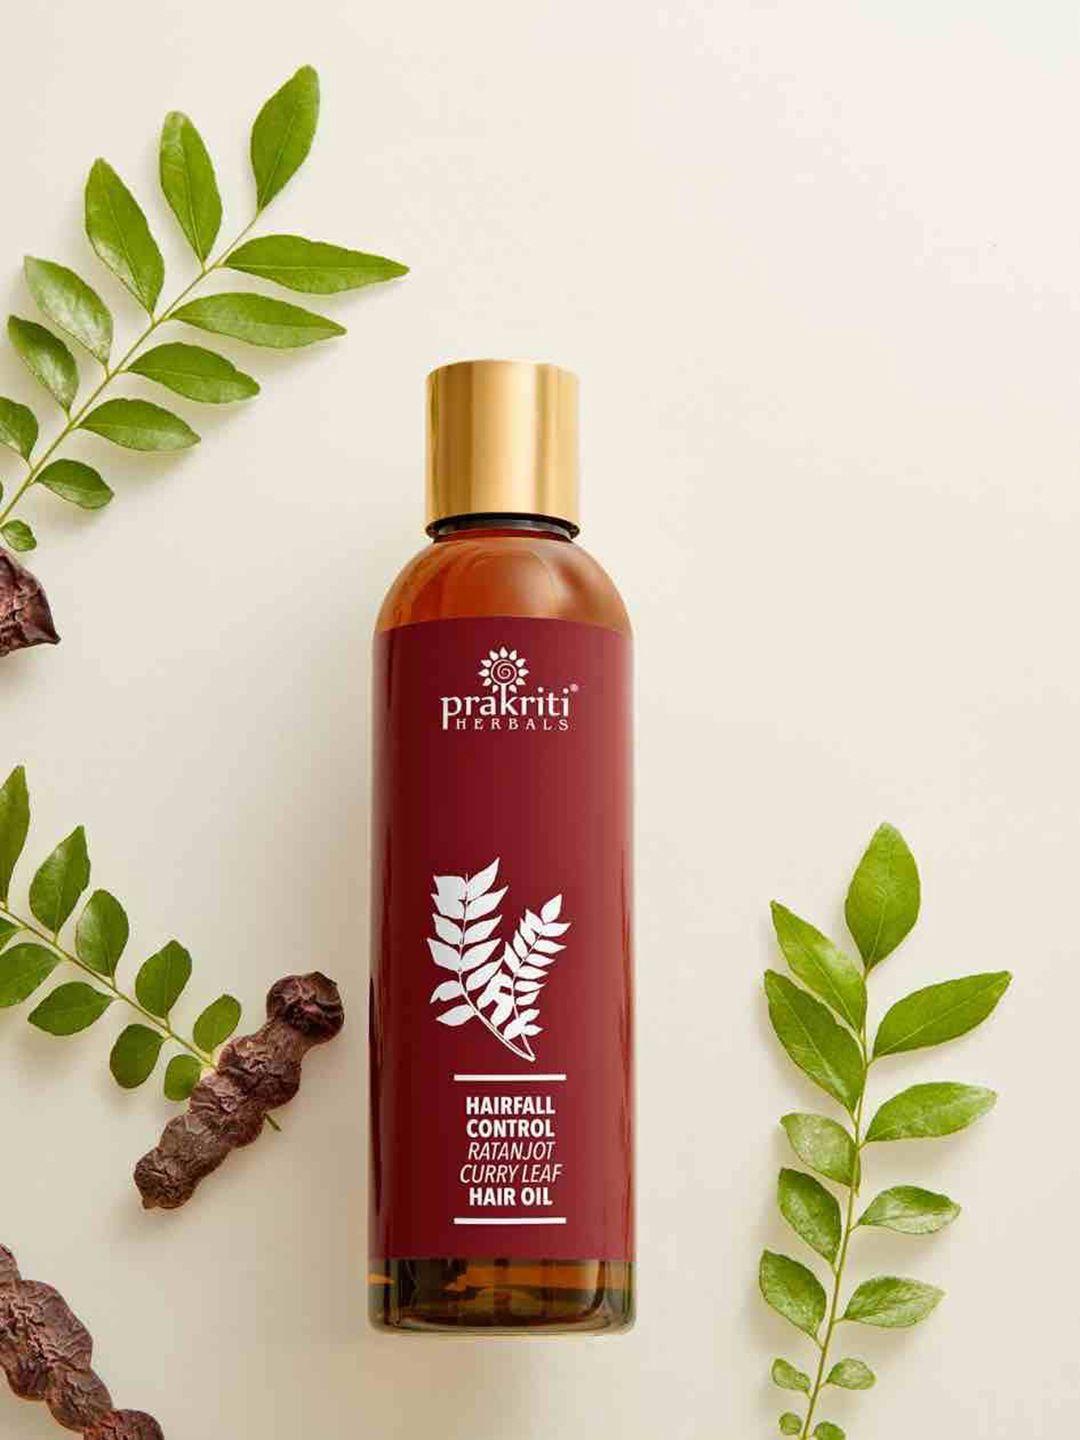 prakriti herbals hairfall control ratanjot curry leaf hair oil - 120ml